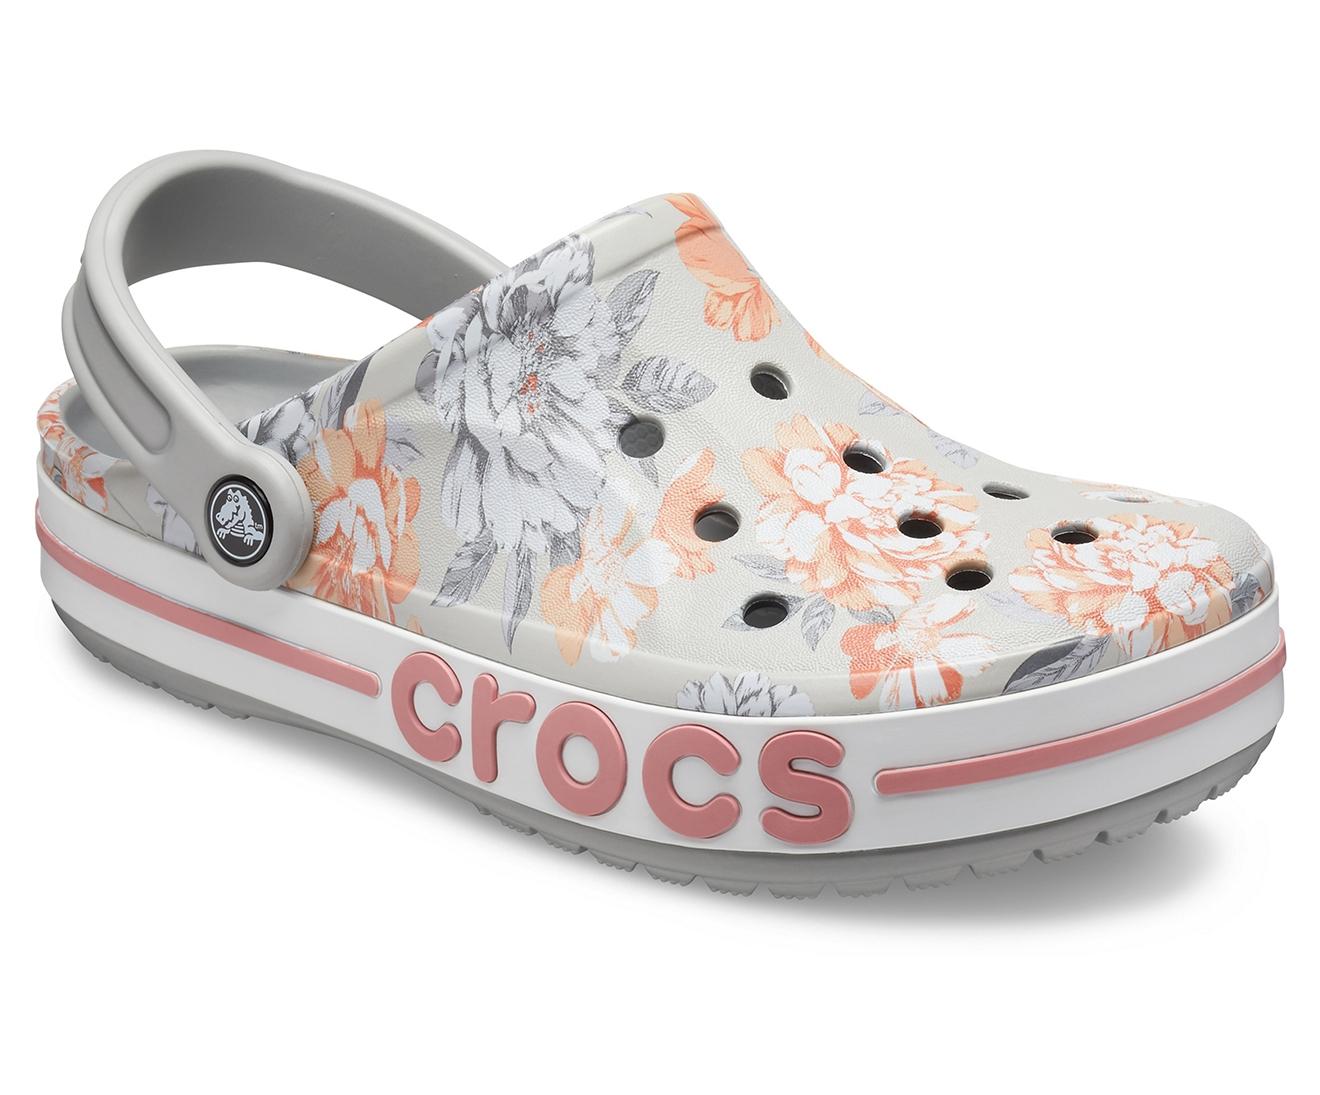 crocs flower print